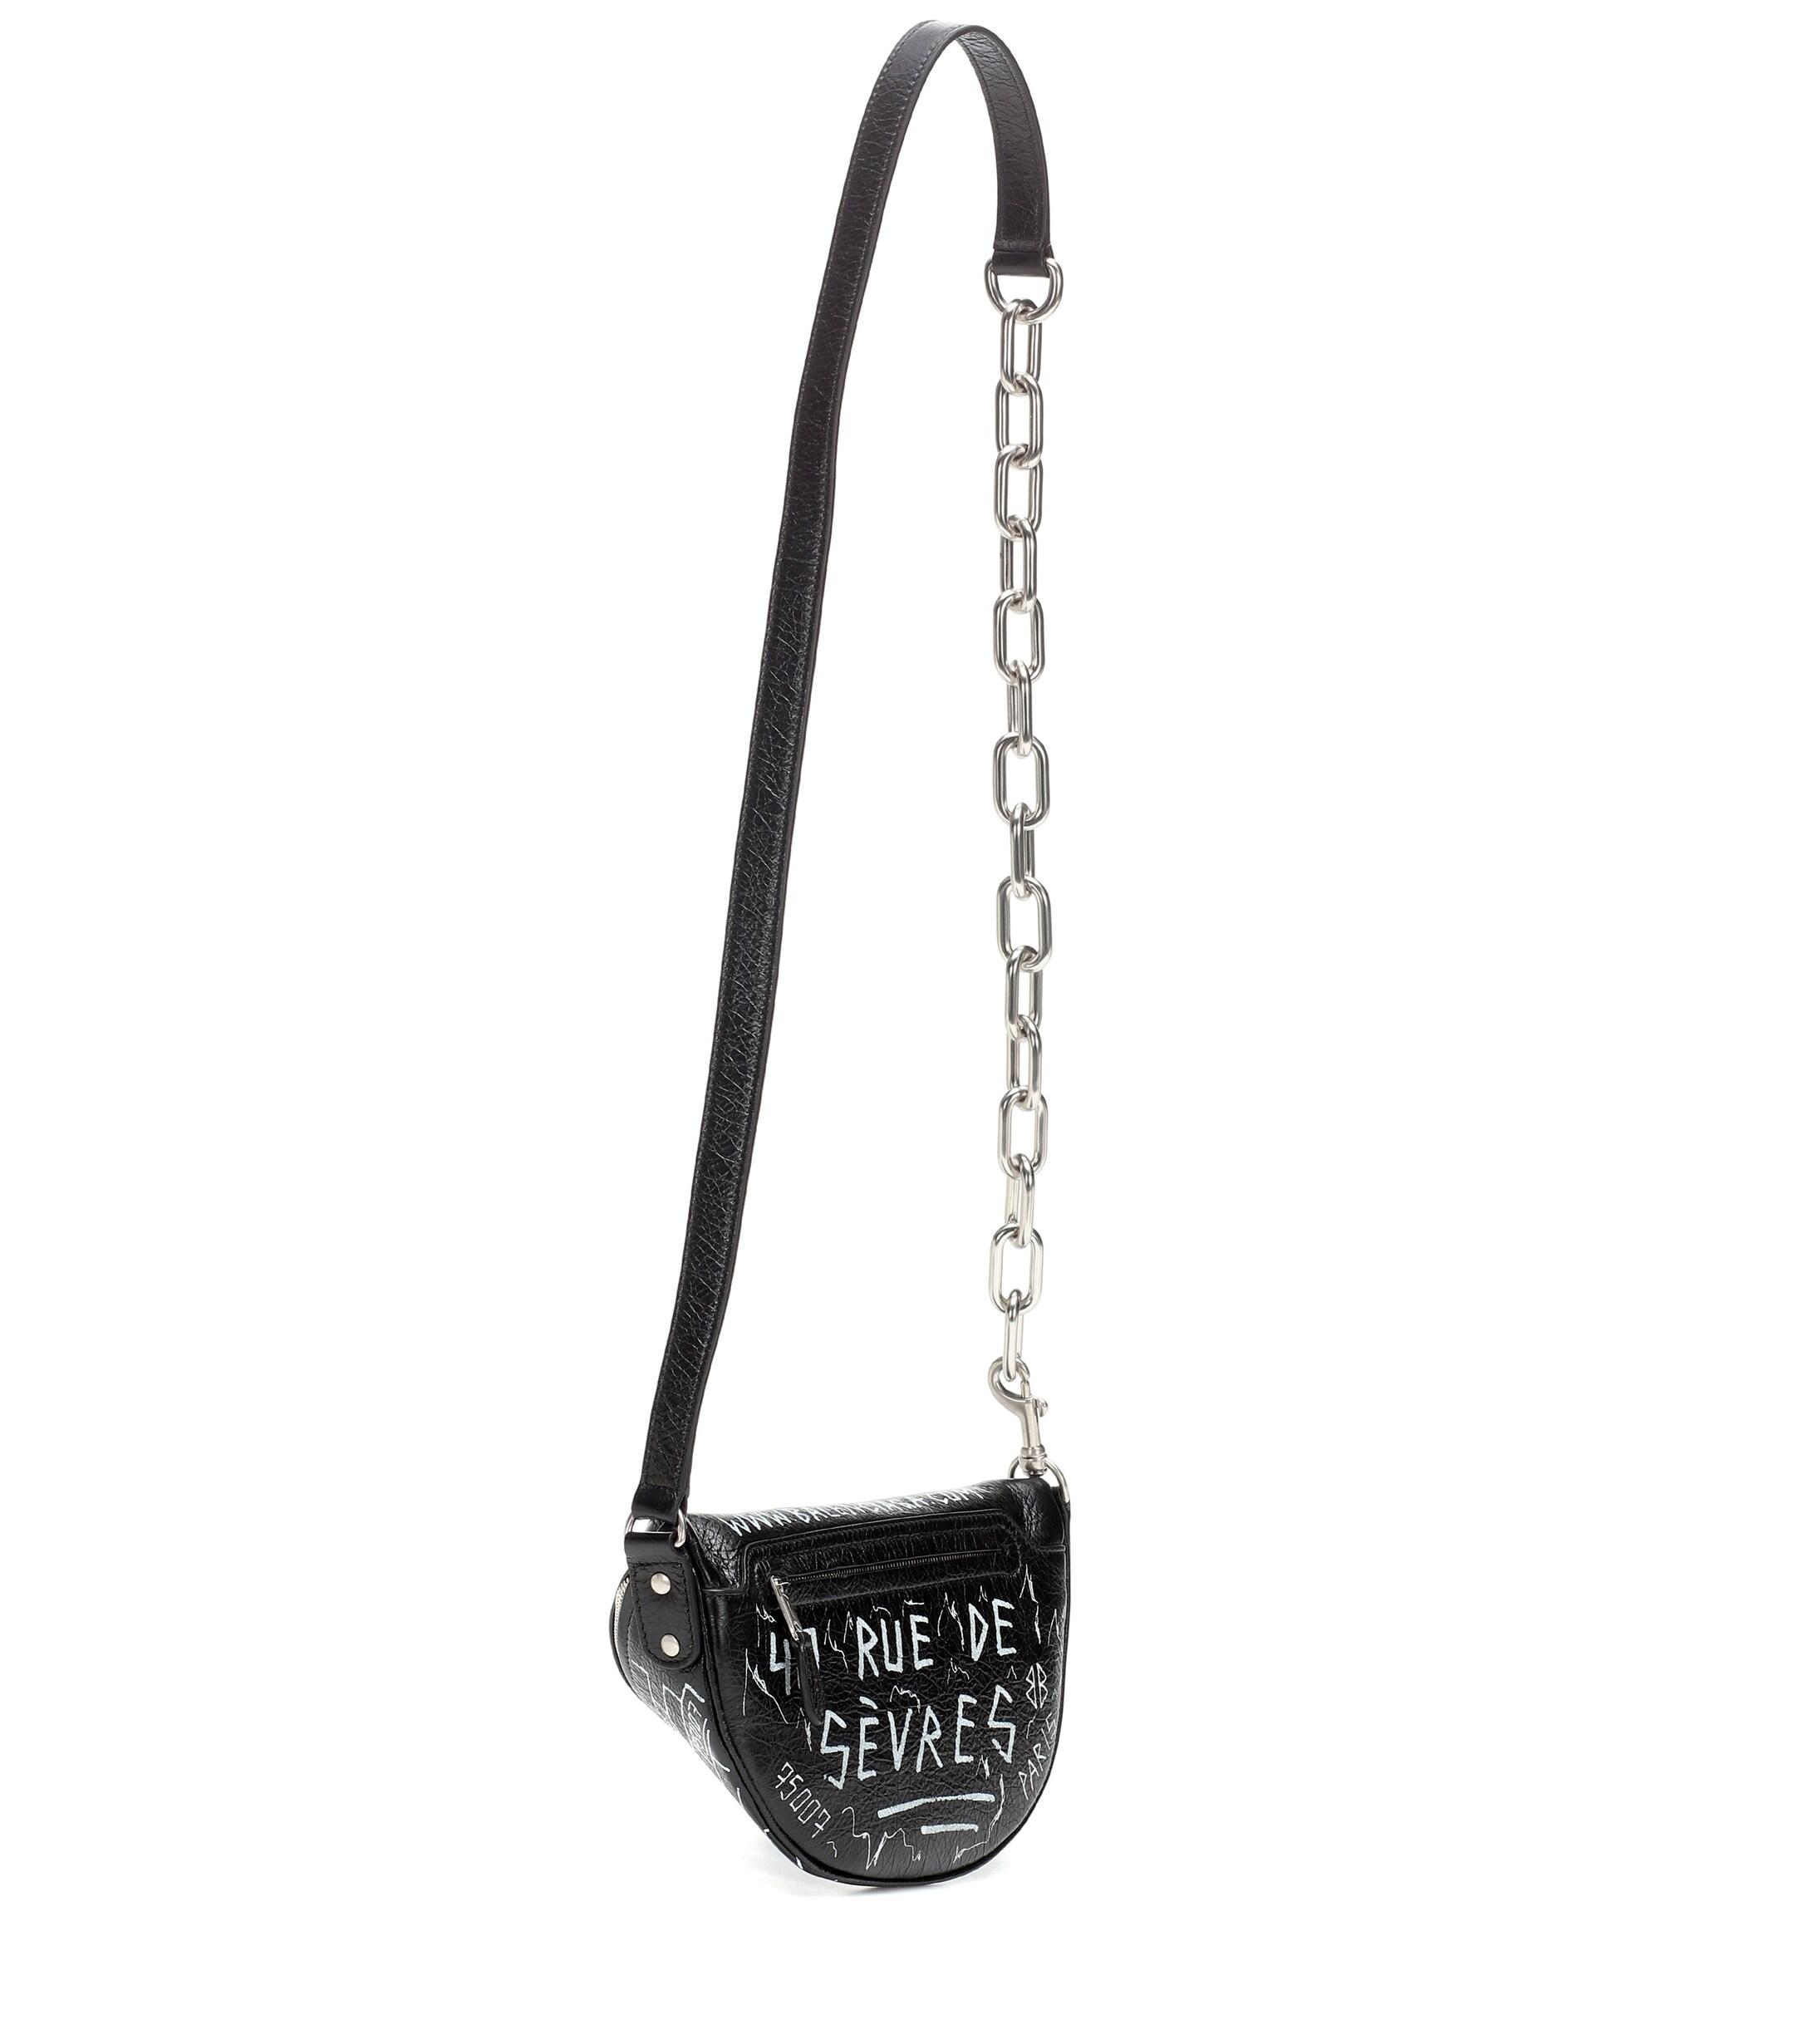 Balenciaga Souvenirs Xxs Graffiti Belt Bag in Black | Lyst